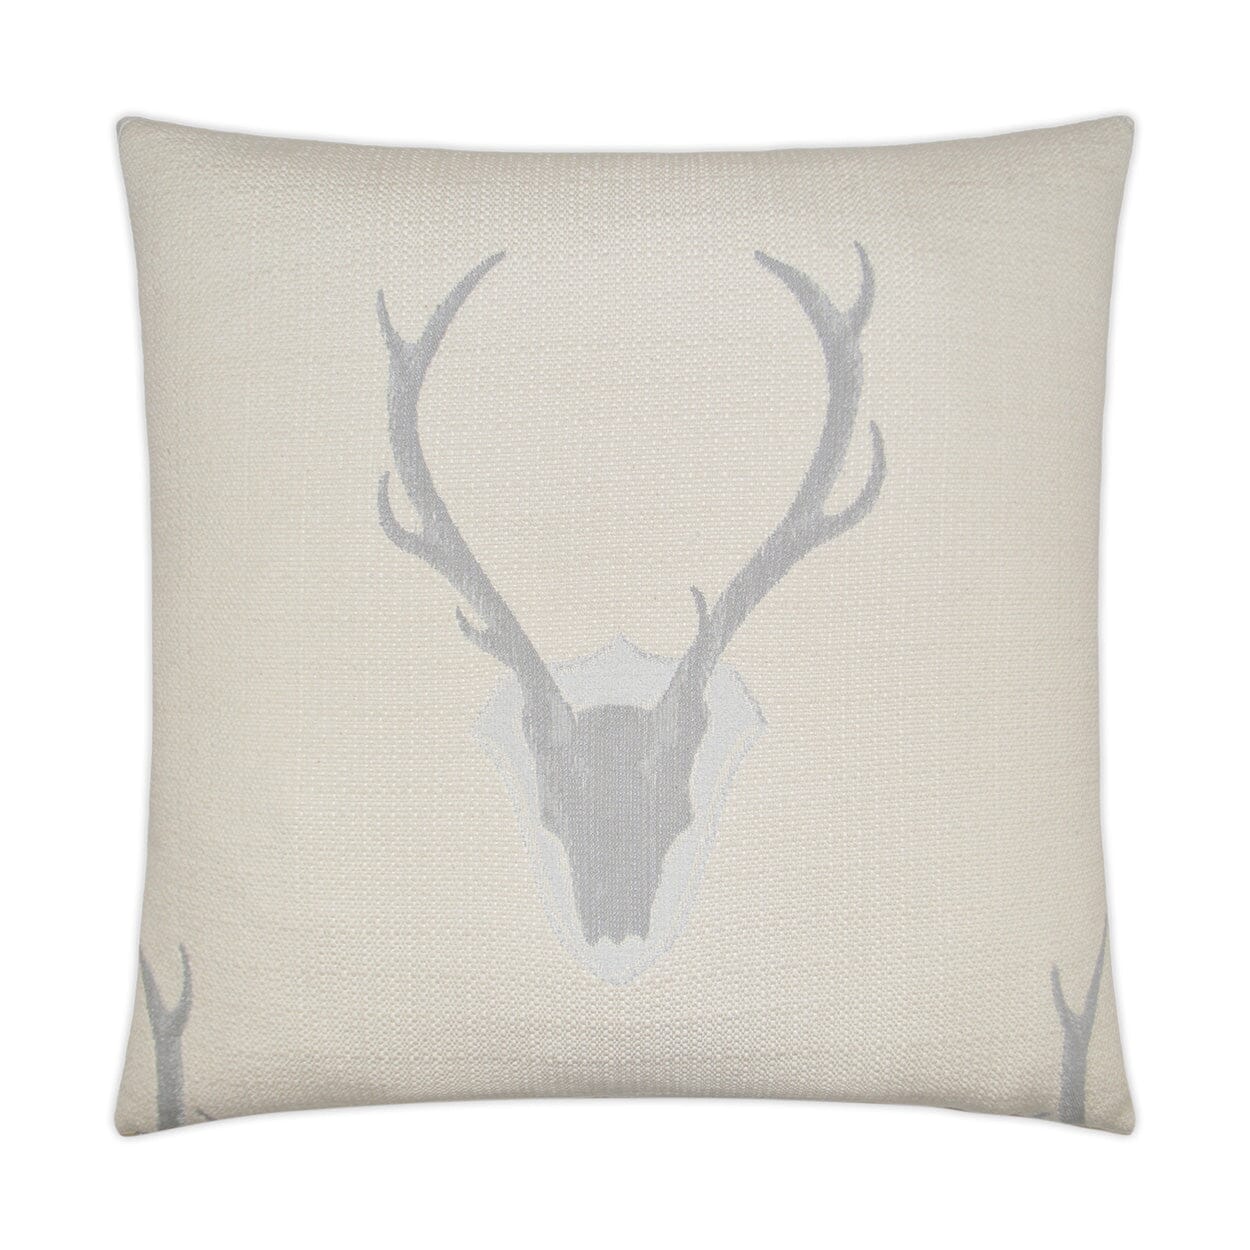 D.V. Kap Uncle Buck 24" x 24" Decorative Throw Pillow | Western Chic Pillows D.V Kap Home